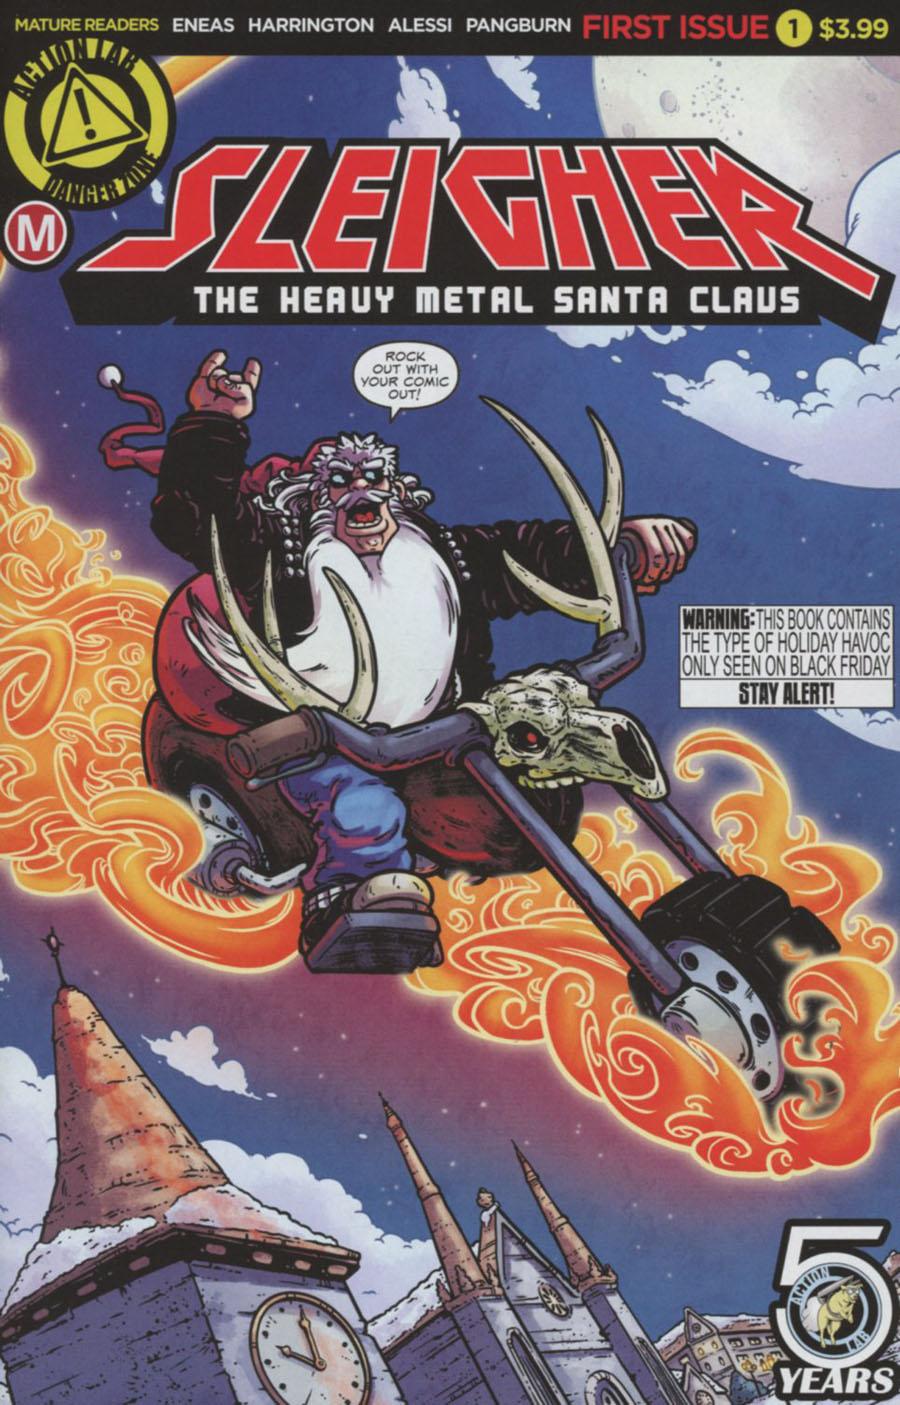 Sleigher Heavy Metal Santa Claus Vol. 1 #1